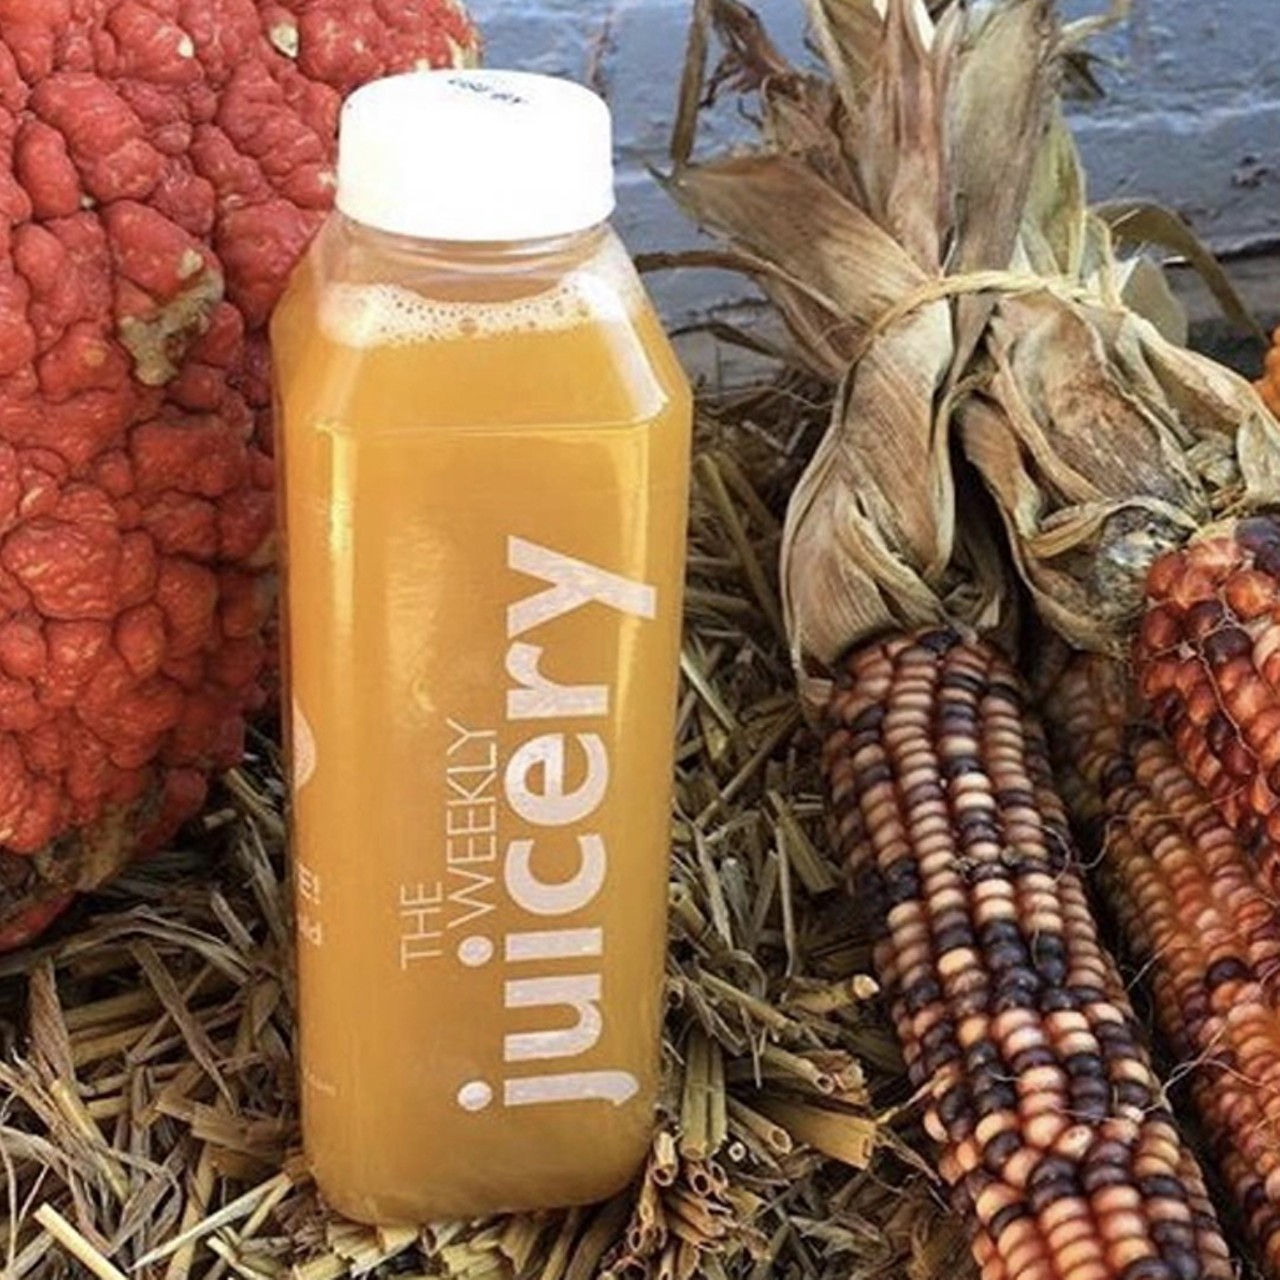 The Weekly Juicery
OH MY SQUASH juice (has pumpkin in it)
2727 Erie Ave., Hyde Park
Photo via Instagram.com/TheWeeklyJuicery